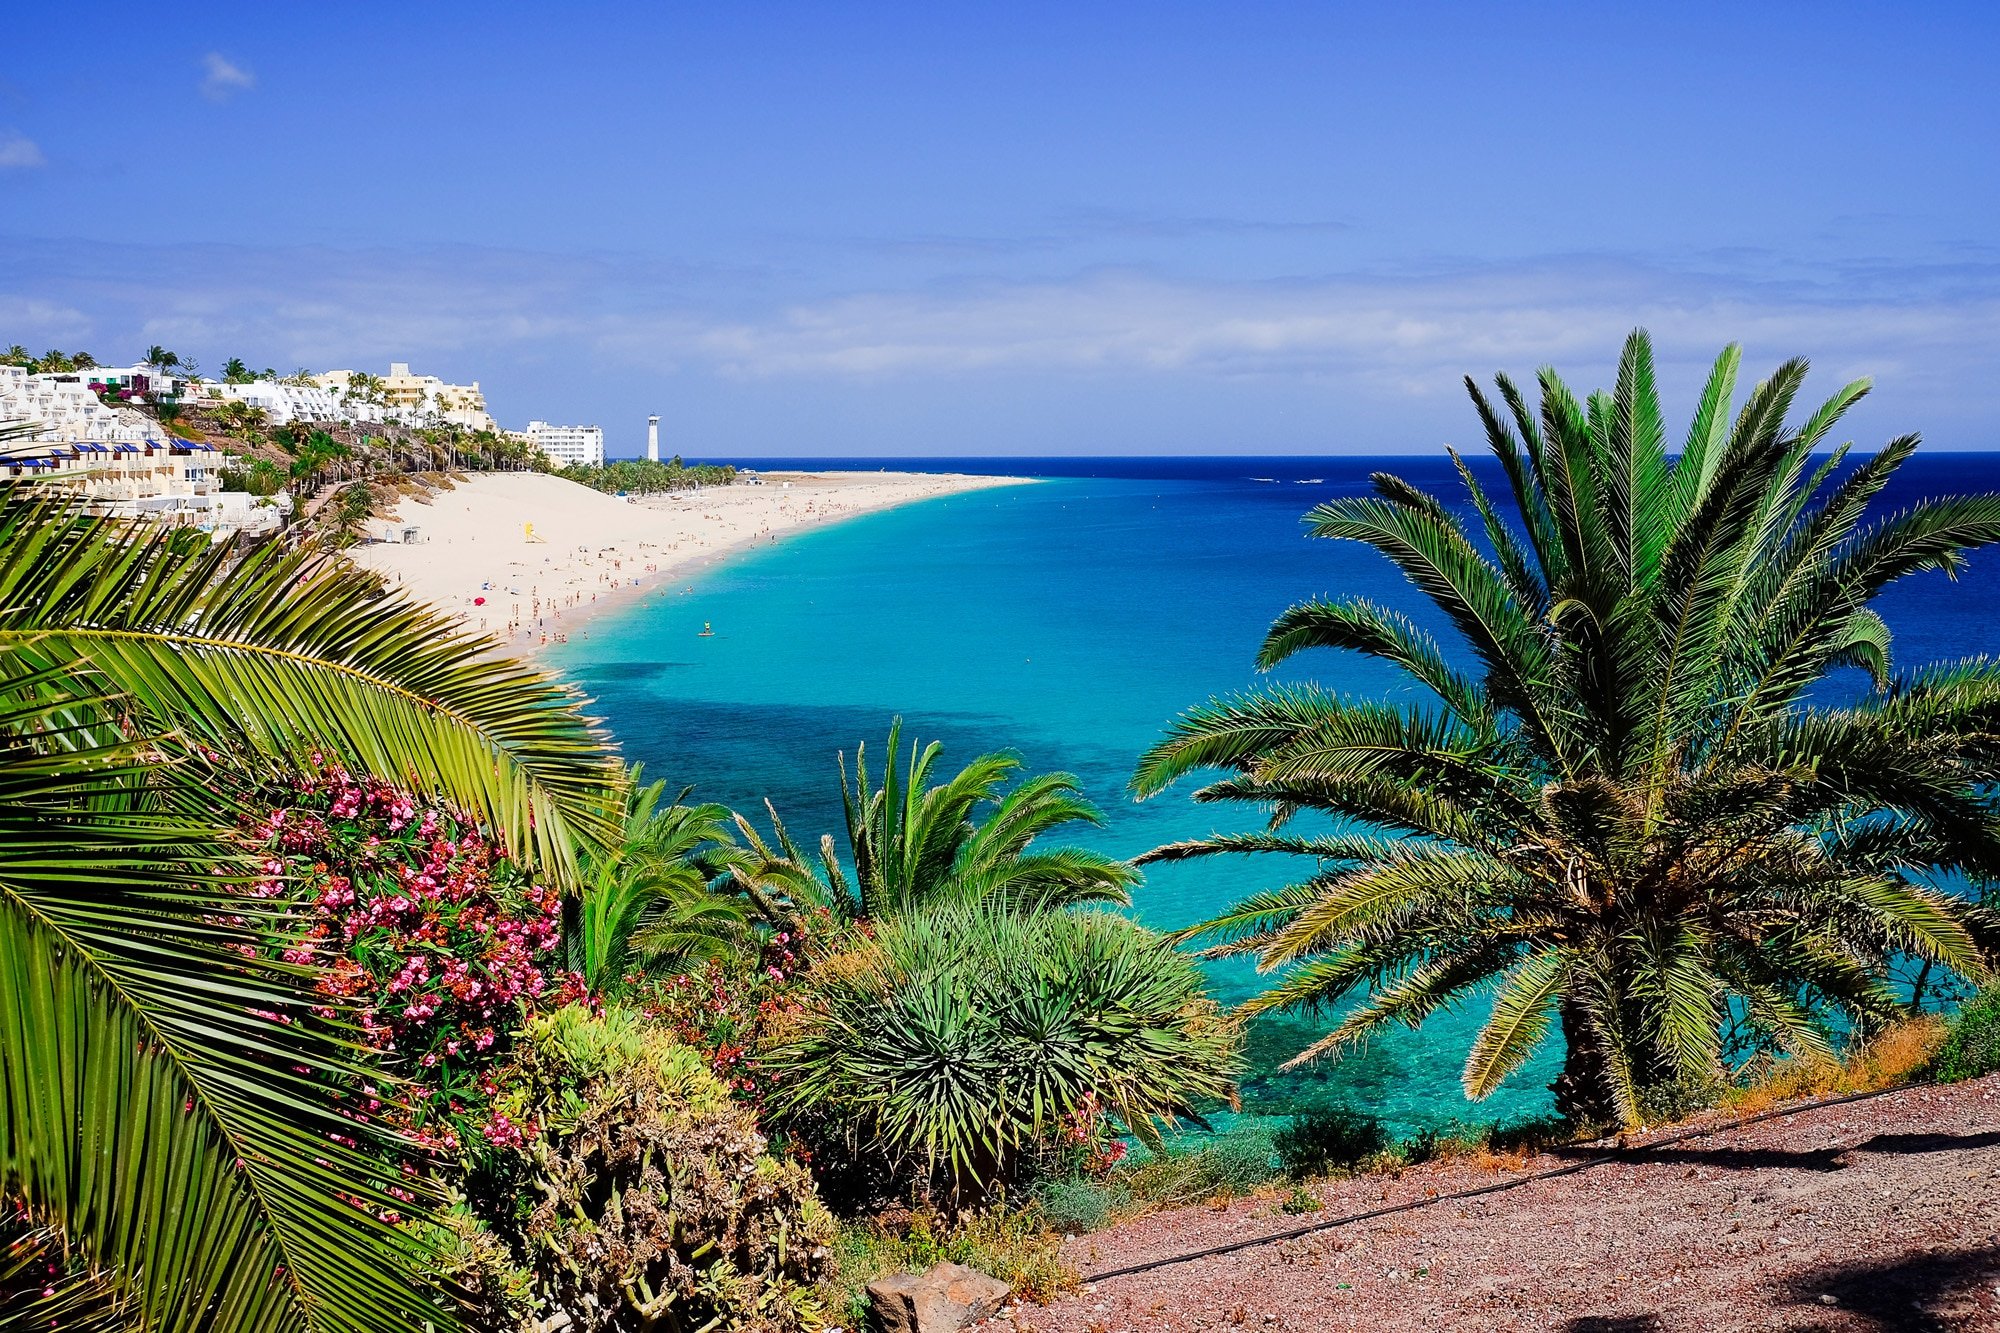 5 nopti in Fuerteventura, Insulele Canare – 200 euro (include zbor + cazare)